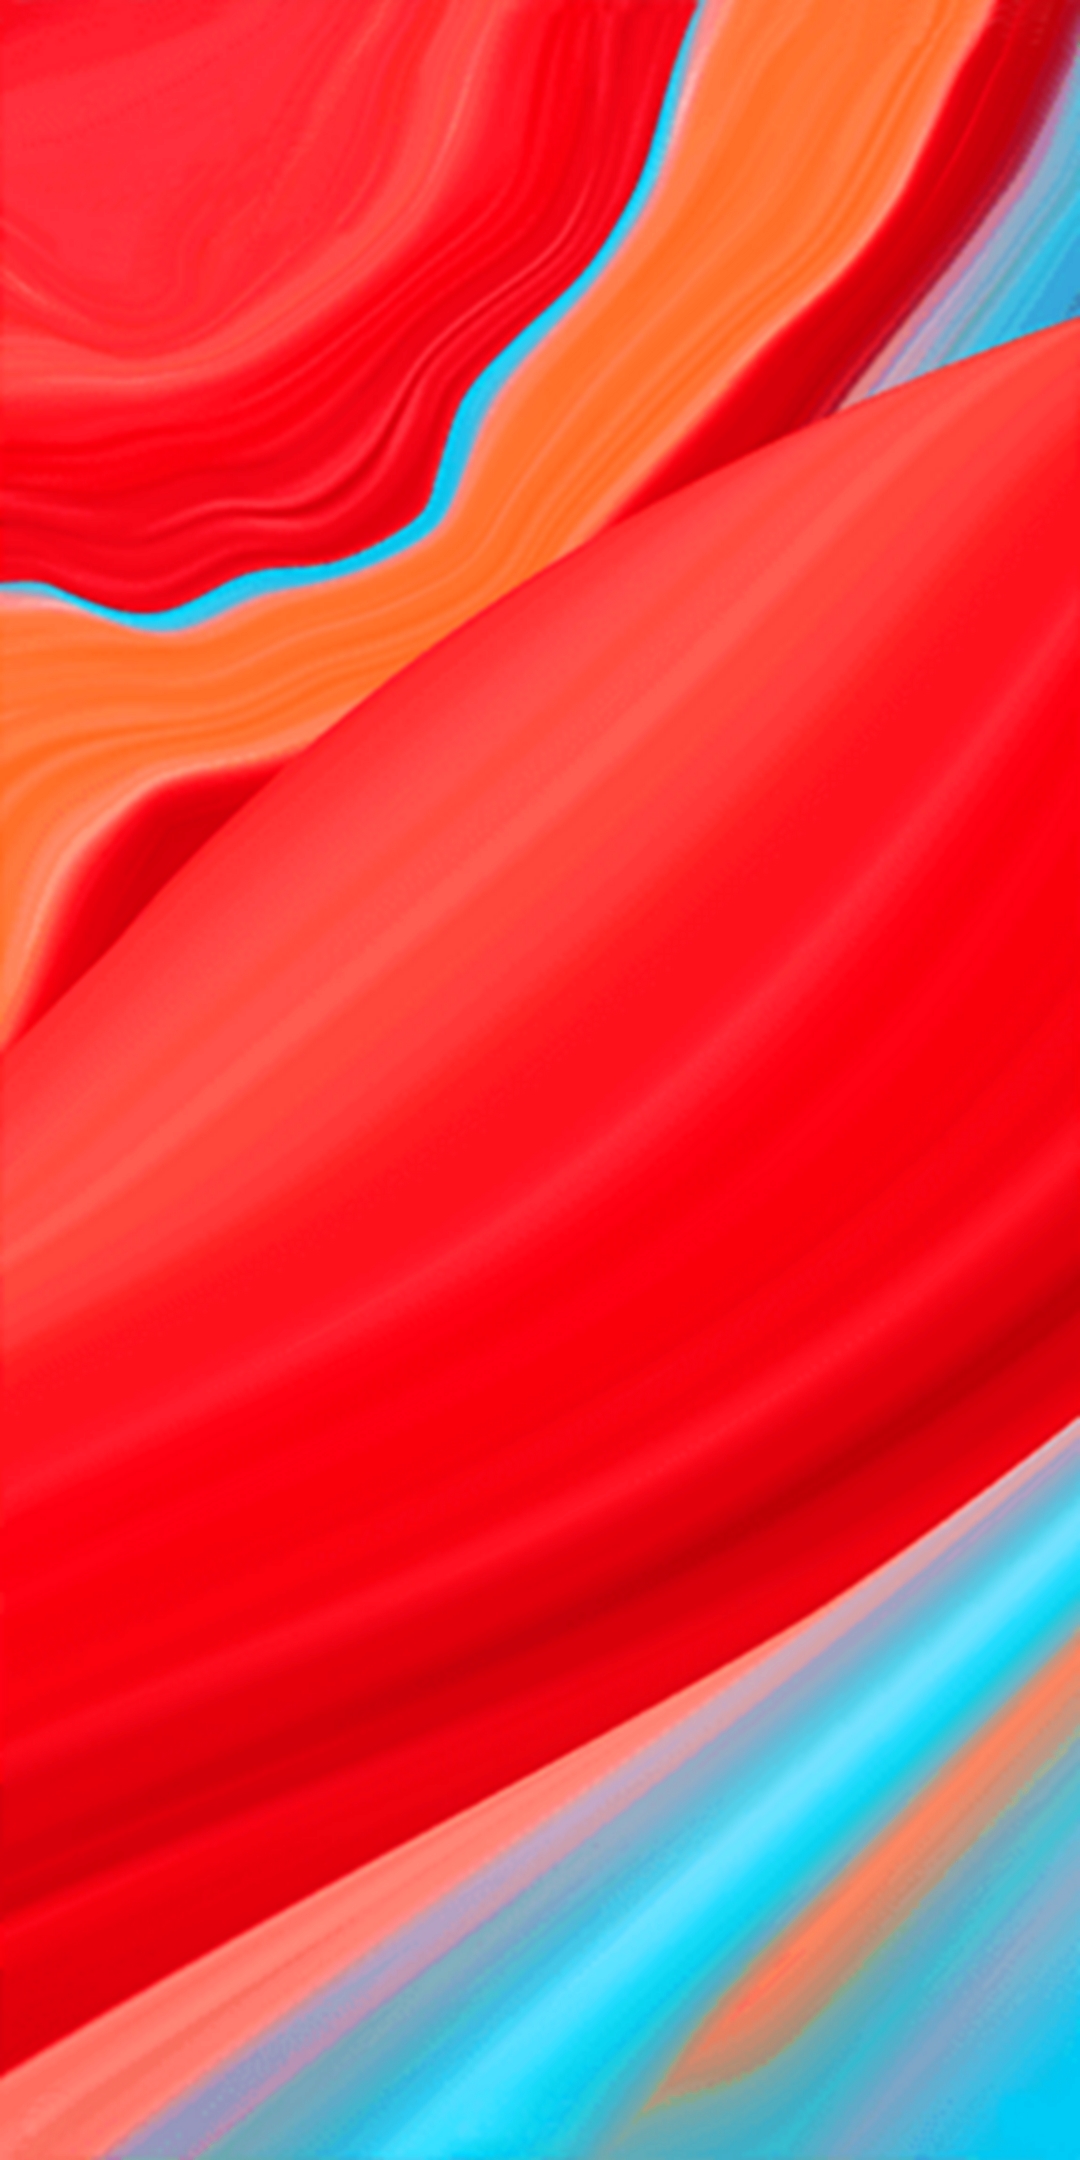  Redmi Note 8 Pro Wallpaper Full HD Portrait 2 Free Download